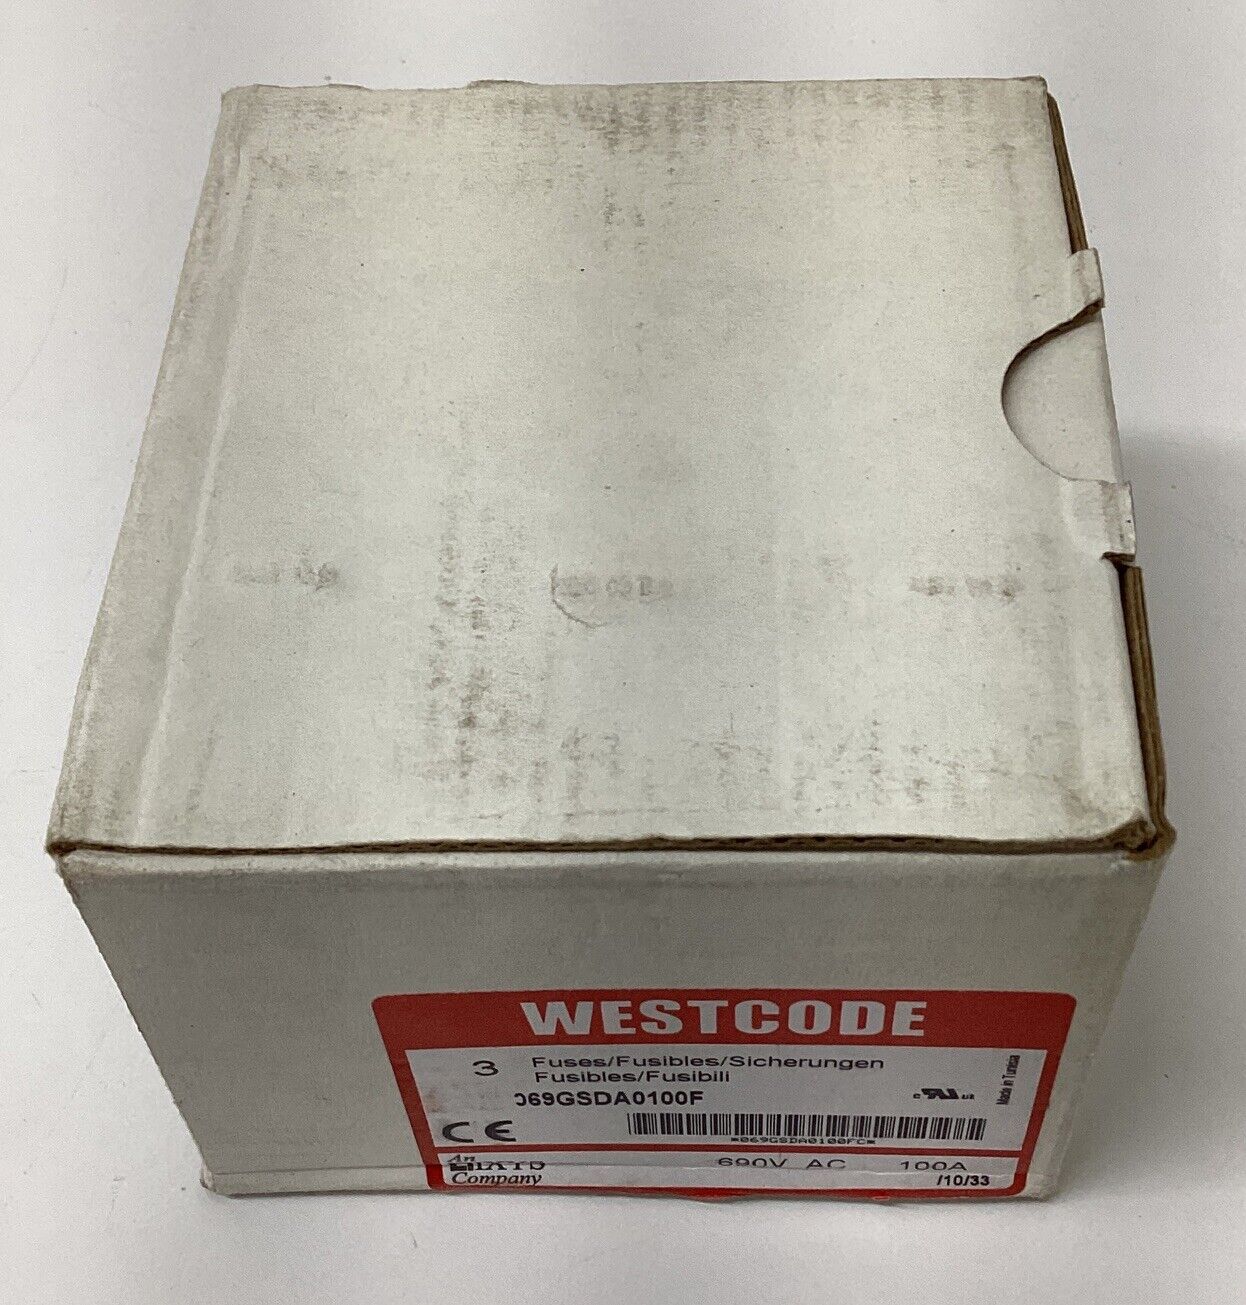 IXYS Westcode 069GSDA0100F 3-Pack 100A Protistor Fuses 690V Class gR (BK167)